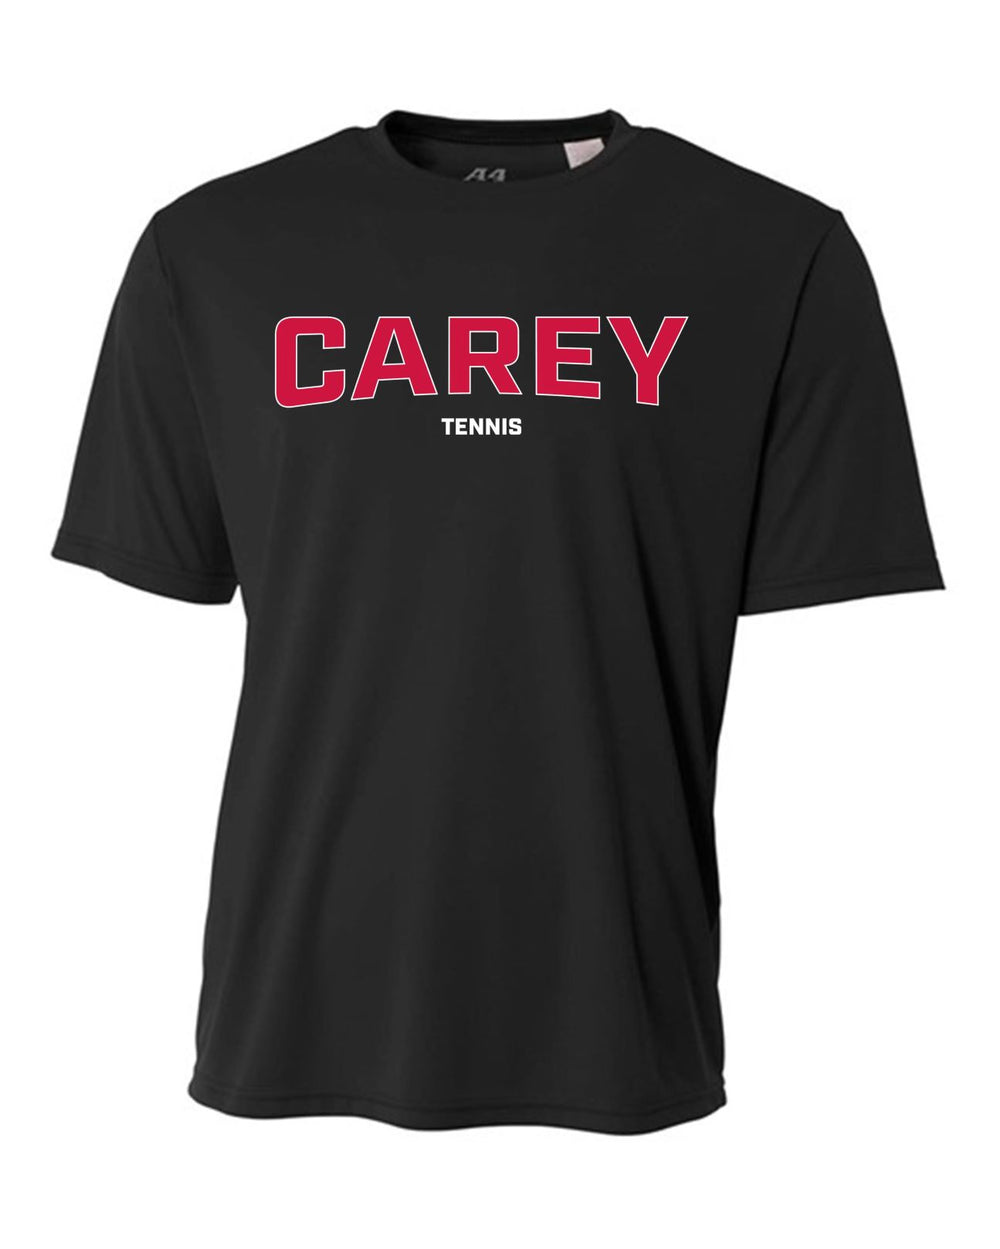 WCU Tennis Men's Short-Sleeve Performance Shirt WCU Tennis Black CAREY - Third Coast Soccer